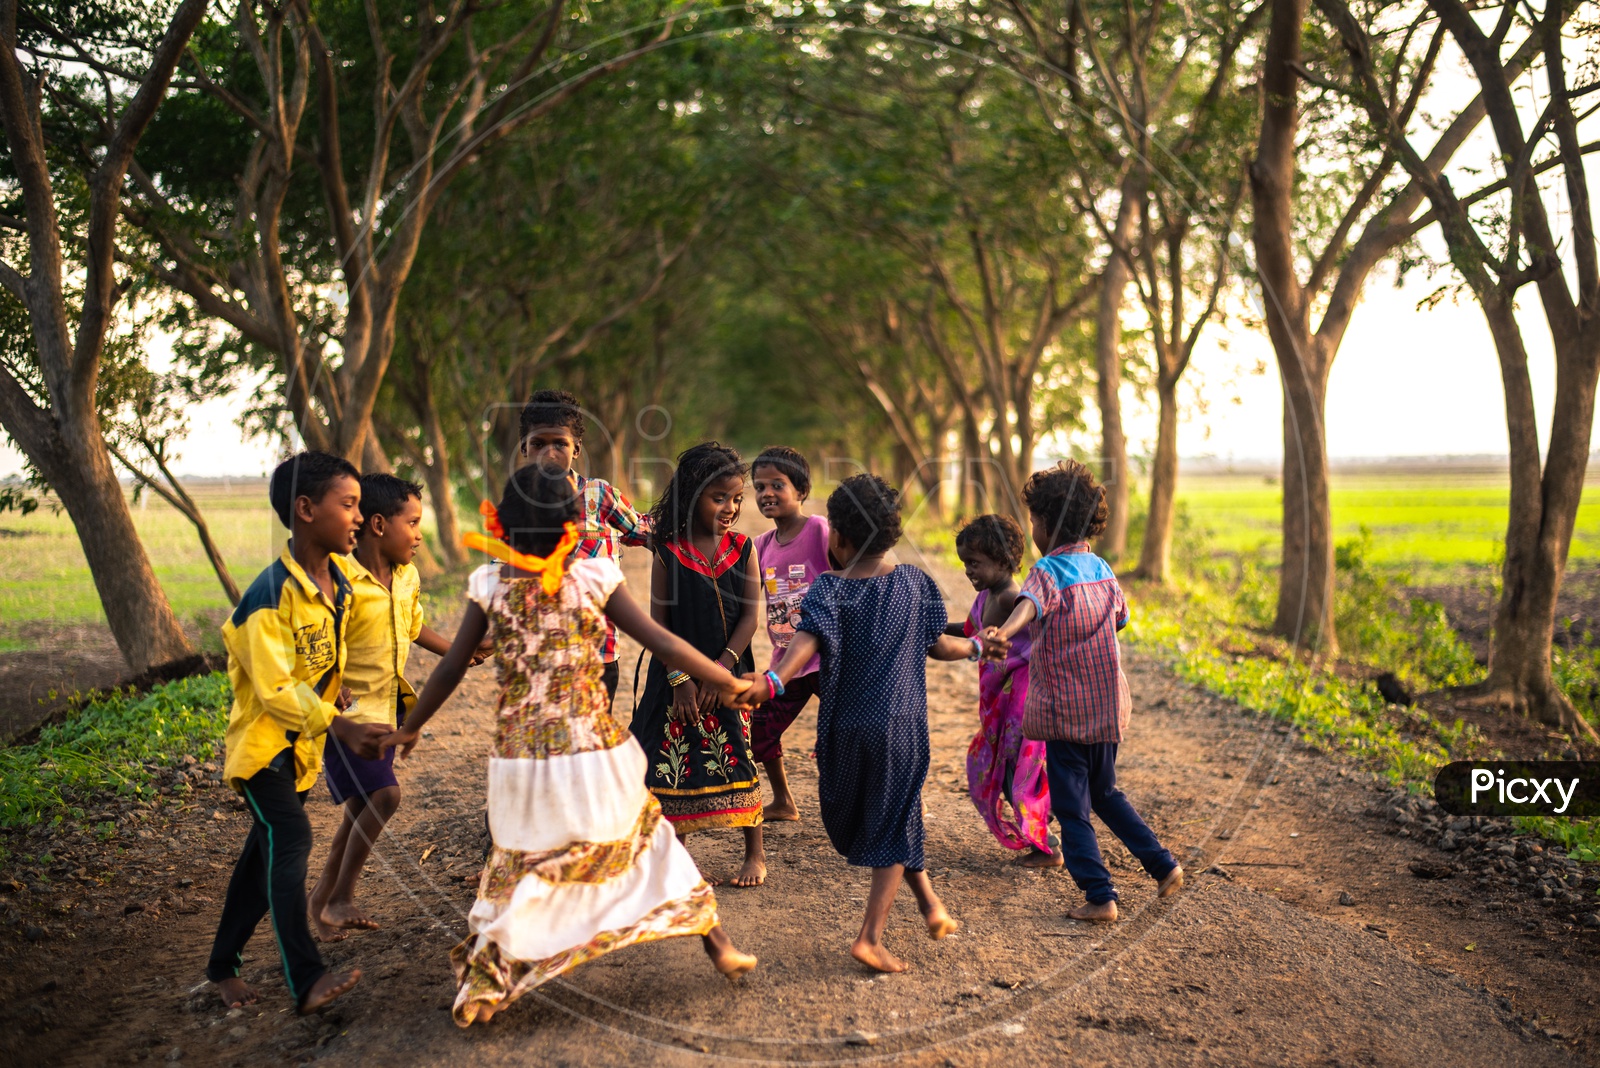 Kids playing on a road between Chiluvuru and Namburu